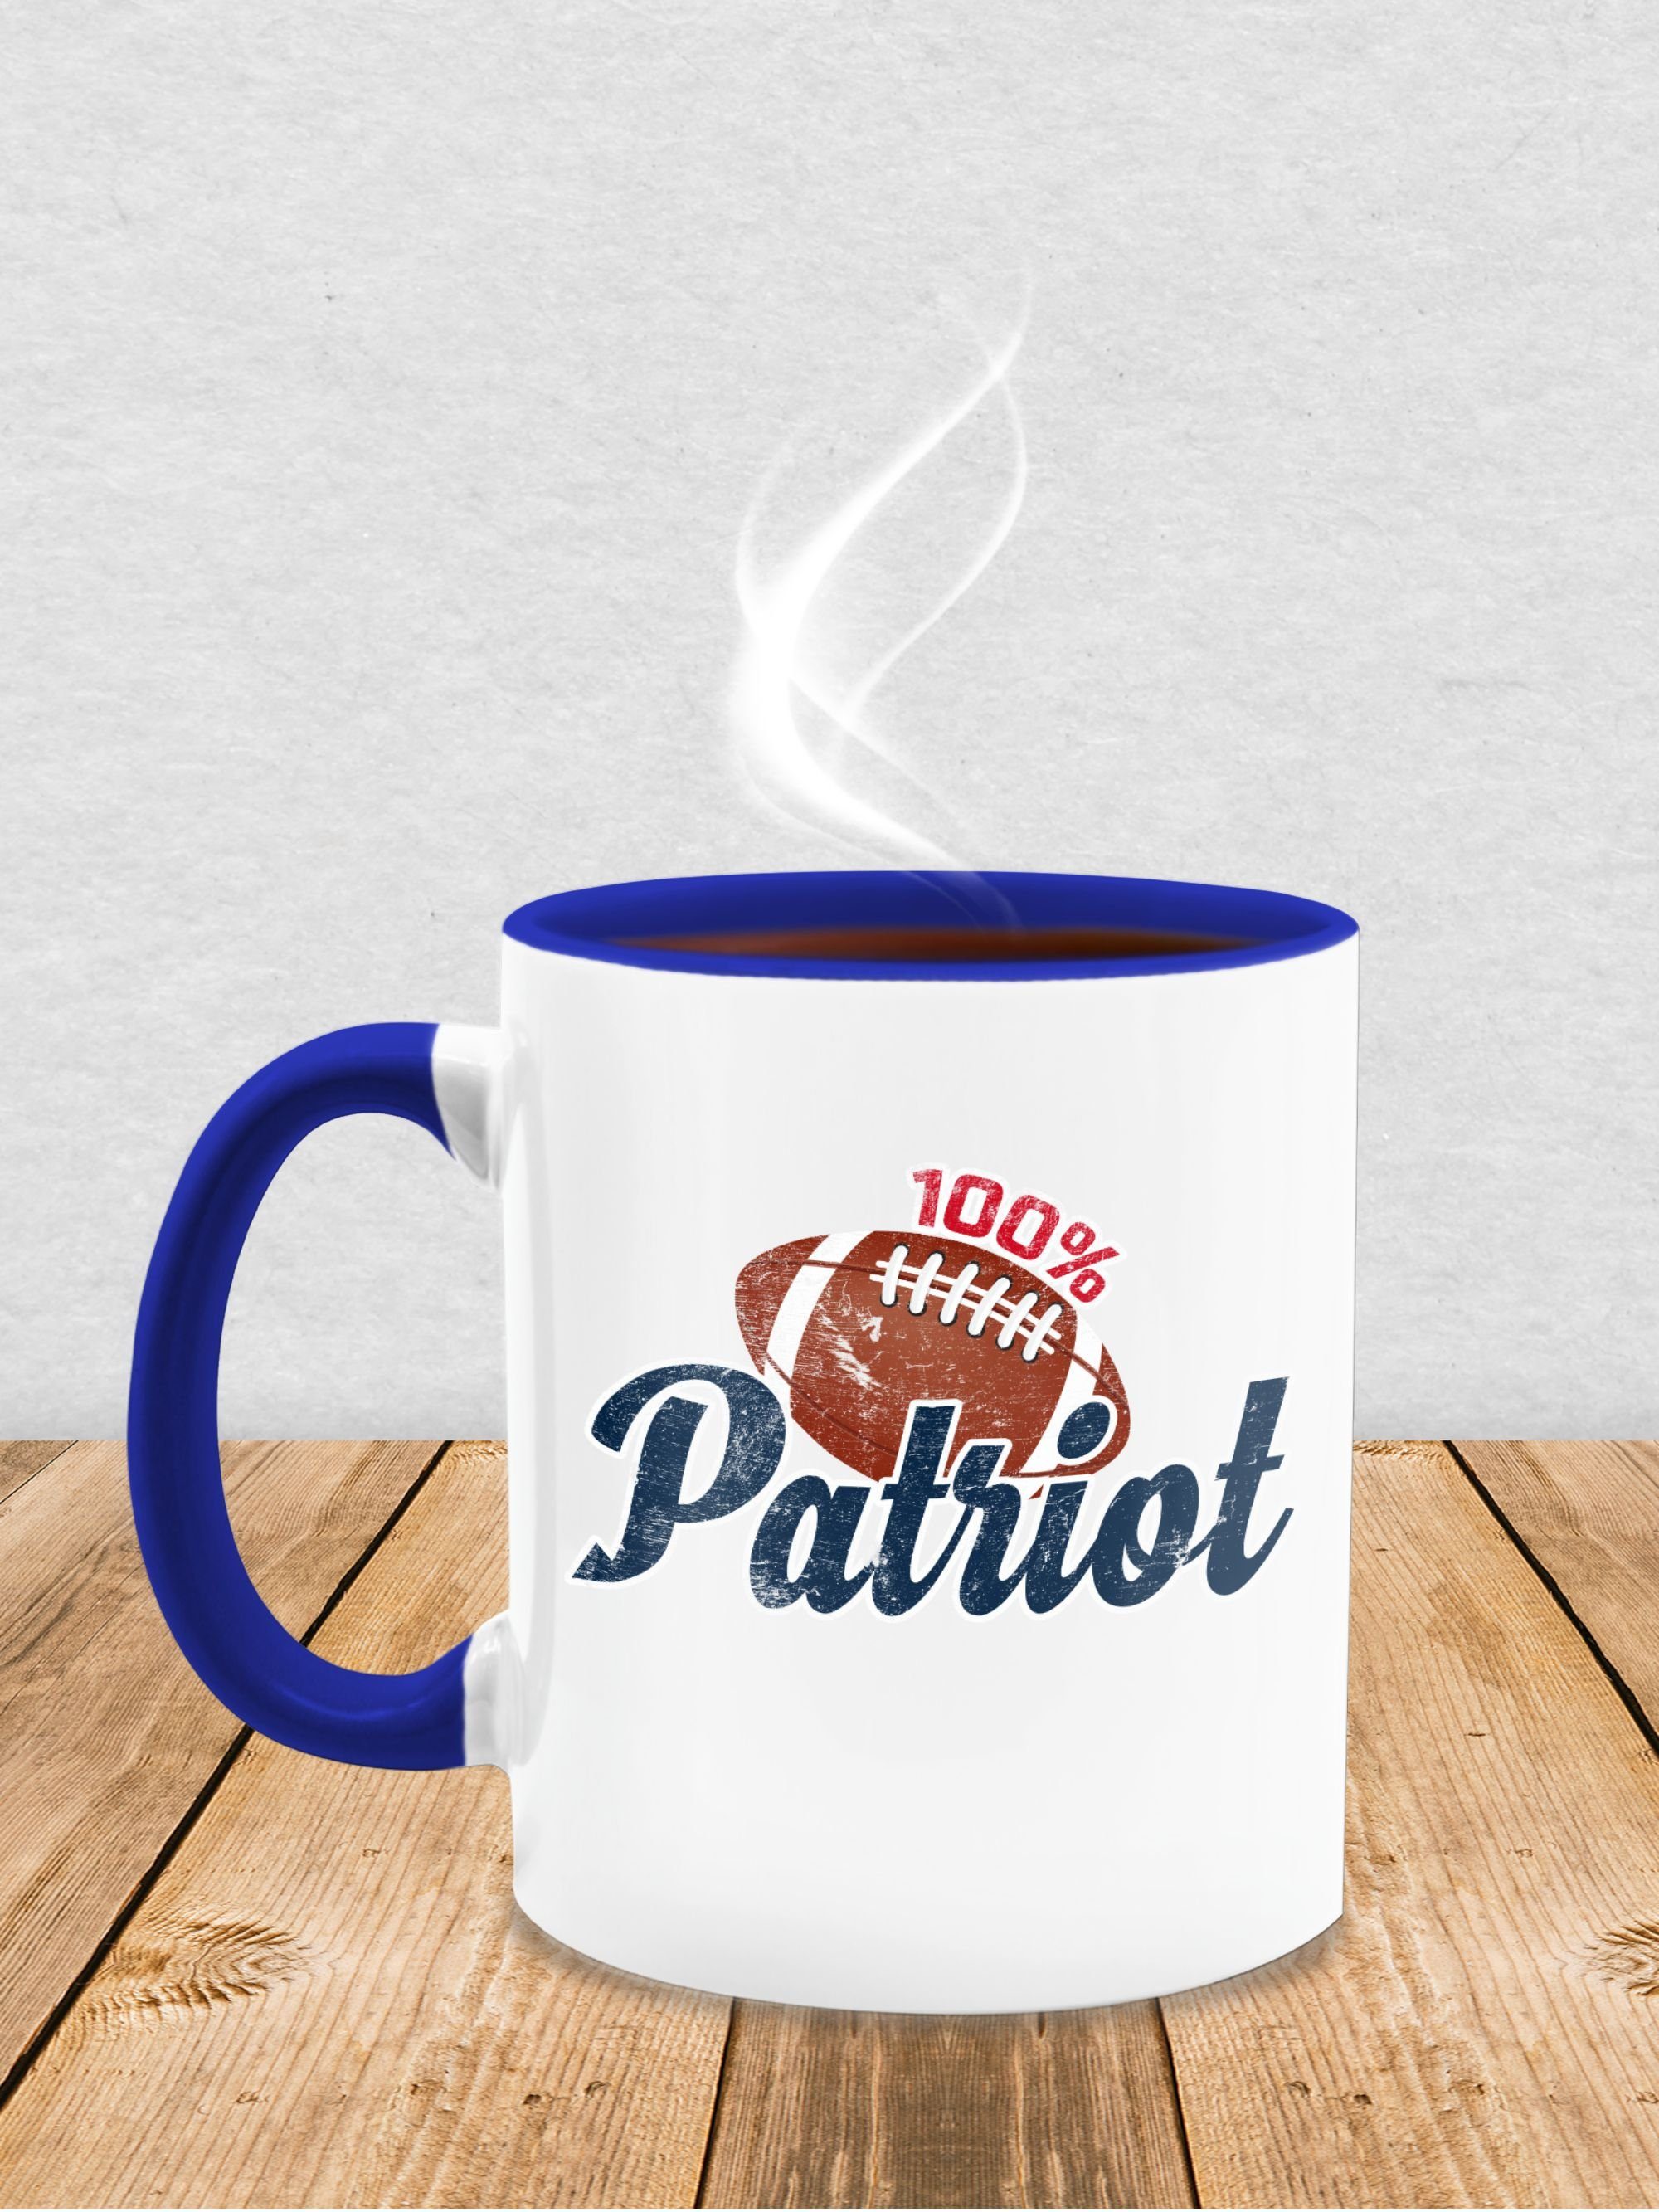 Patriot, 100% Geschenk Tasse Hobby Kaffeetasse Shirtracer 1 Keramik, Dunkelblau